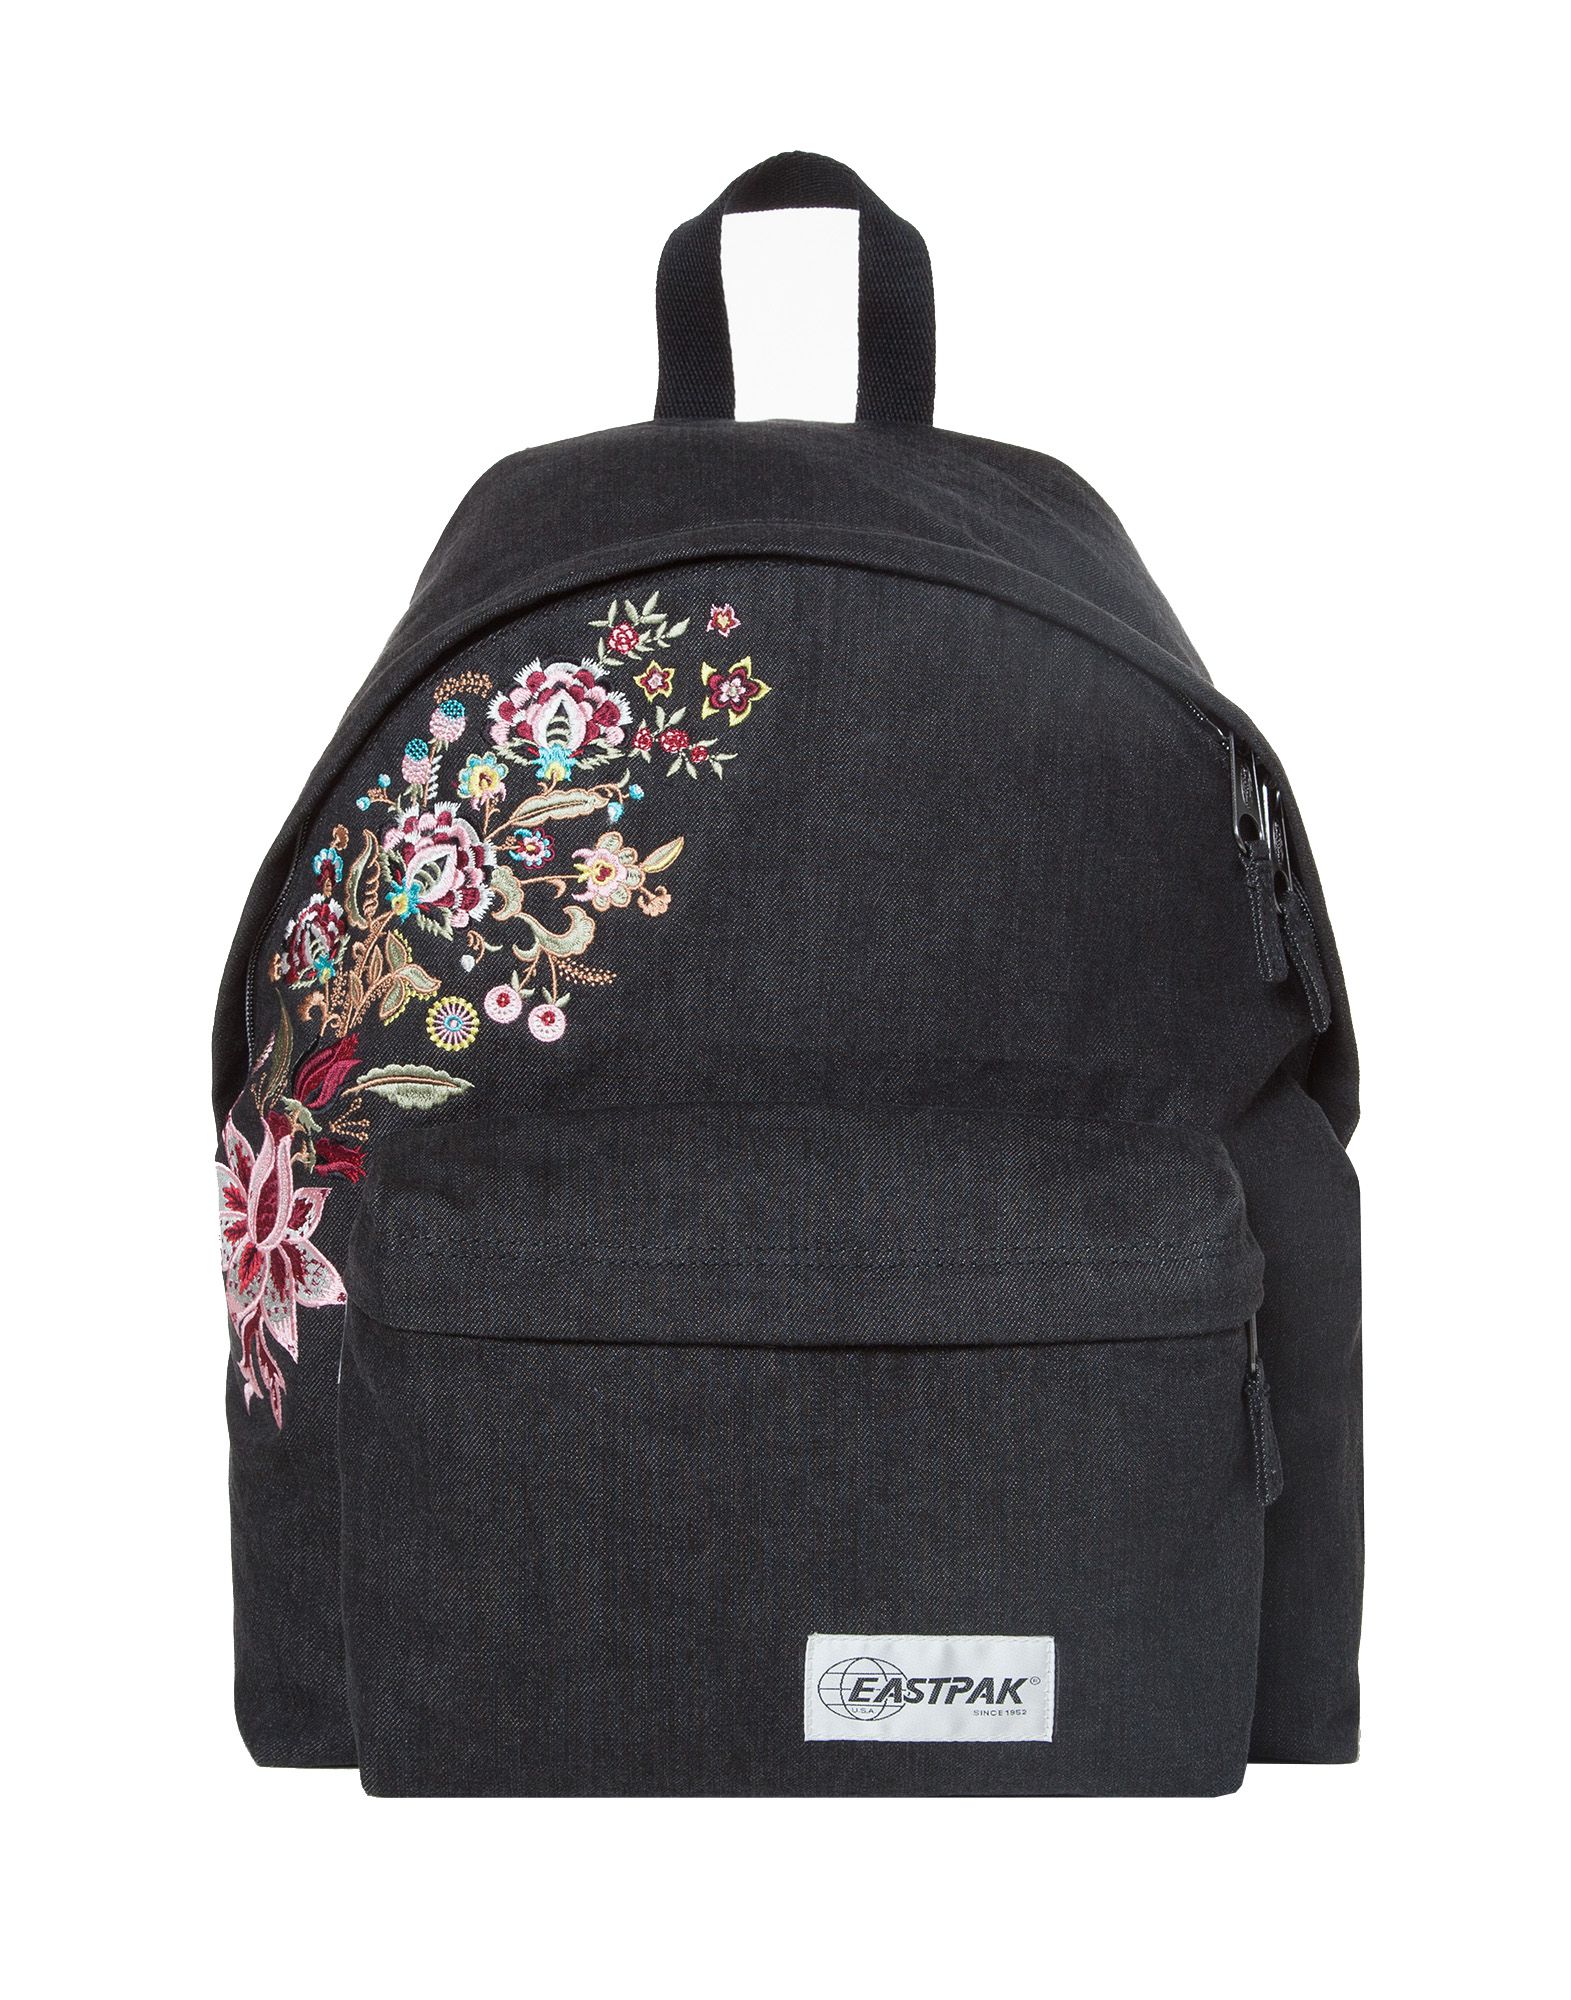 EASTPAK Backpack & fanny pack,45417877GS 1